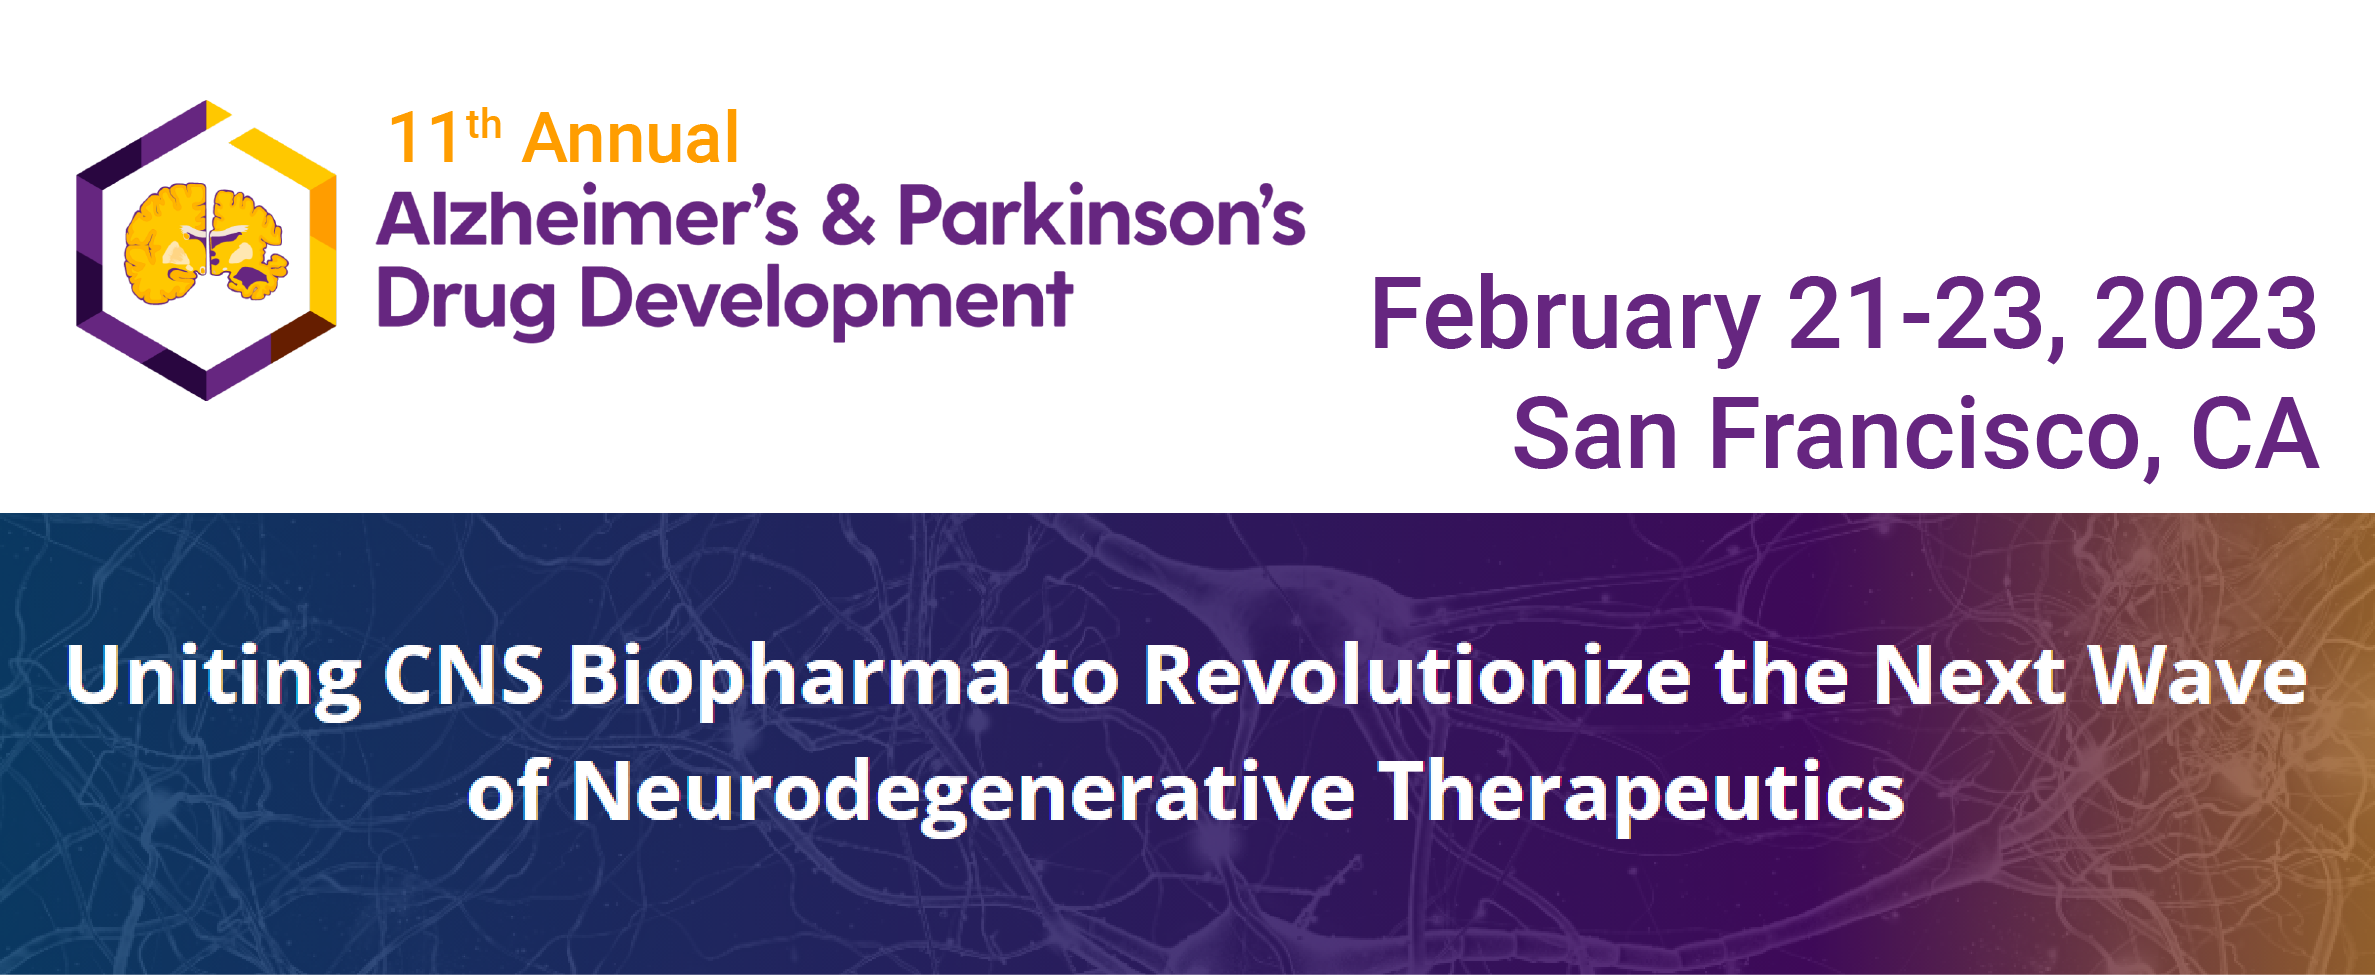 11th Alzheimer’s & Parkinson’s Drug Development